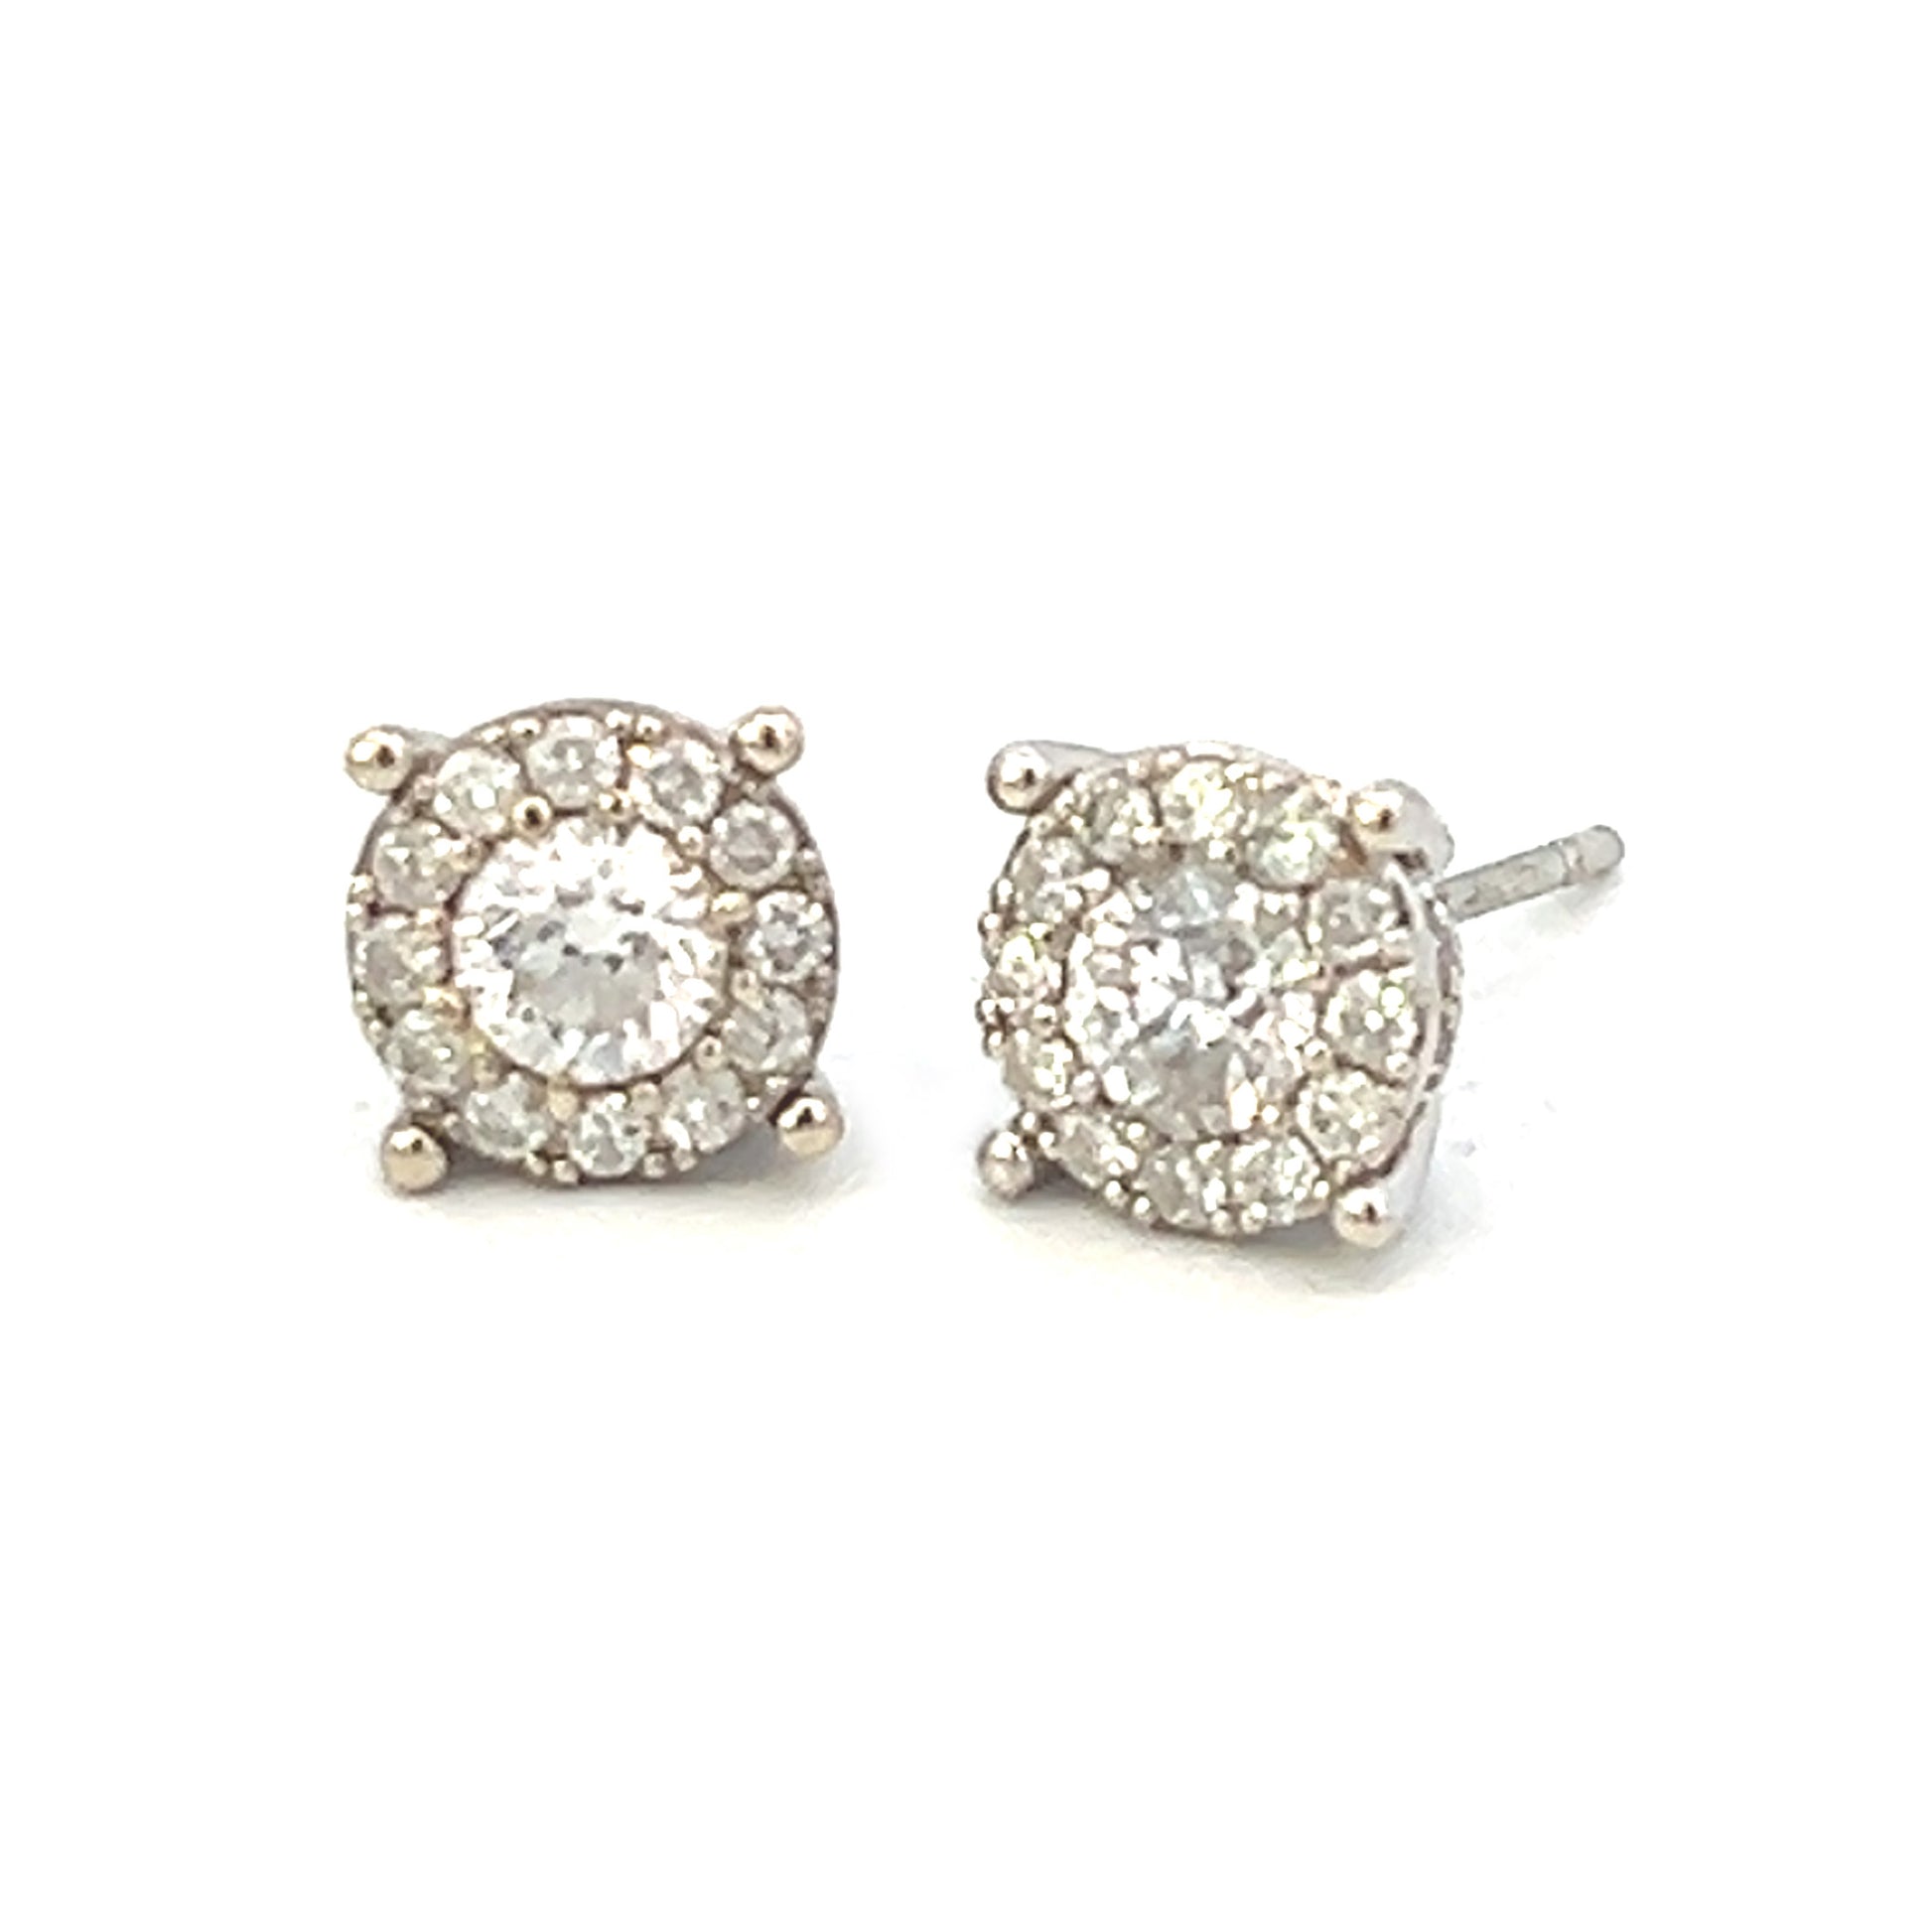 1 Carat Halo Diamond Earrings | Natural Diamond Earrings | 14k White Gold